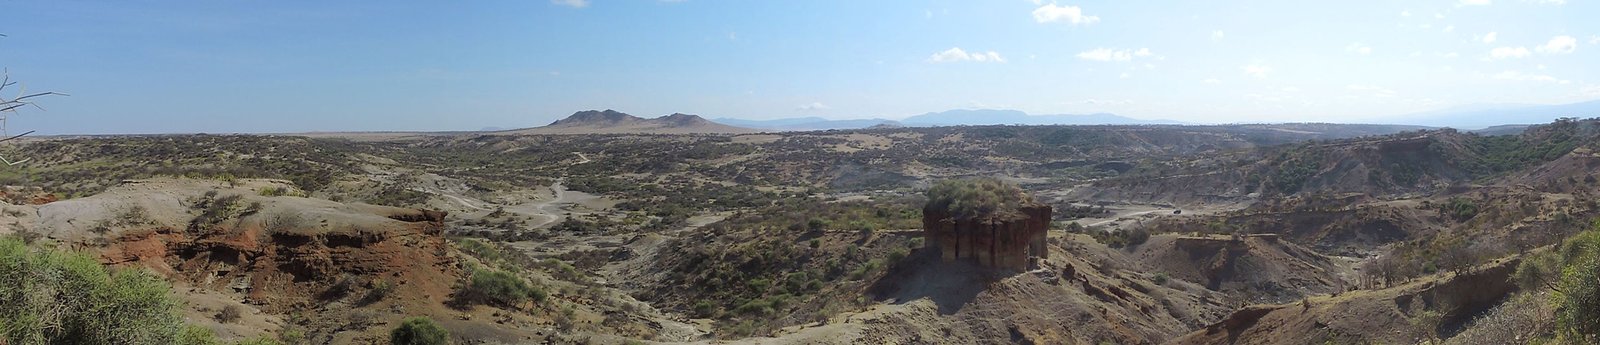 Olduvai Gorge - Archaeological Sites